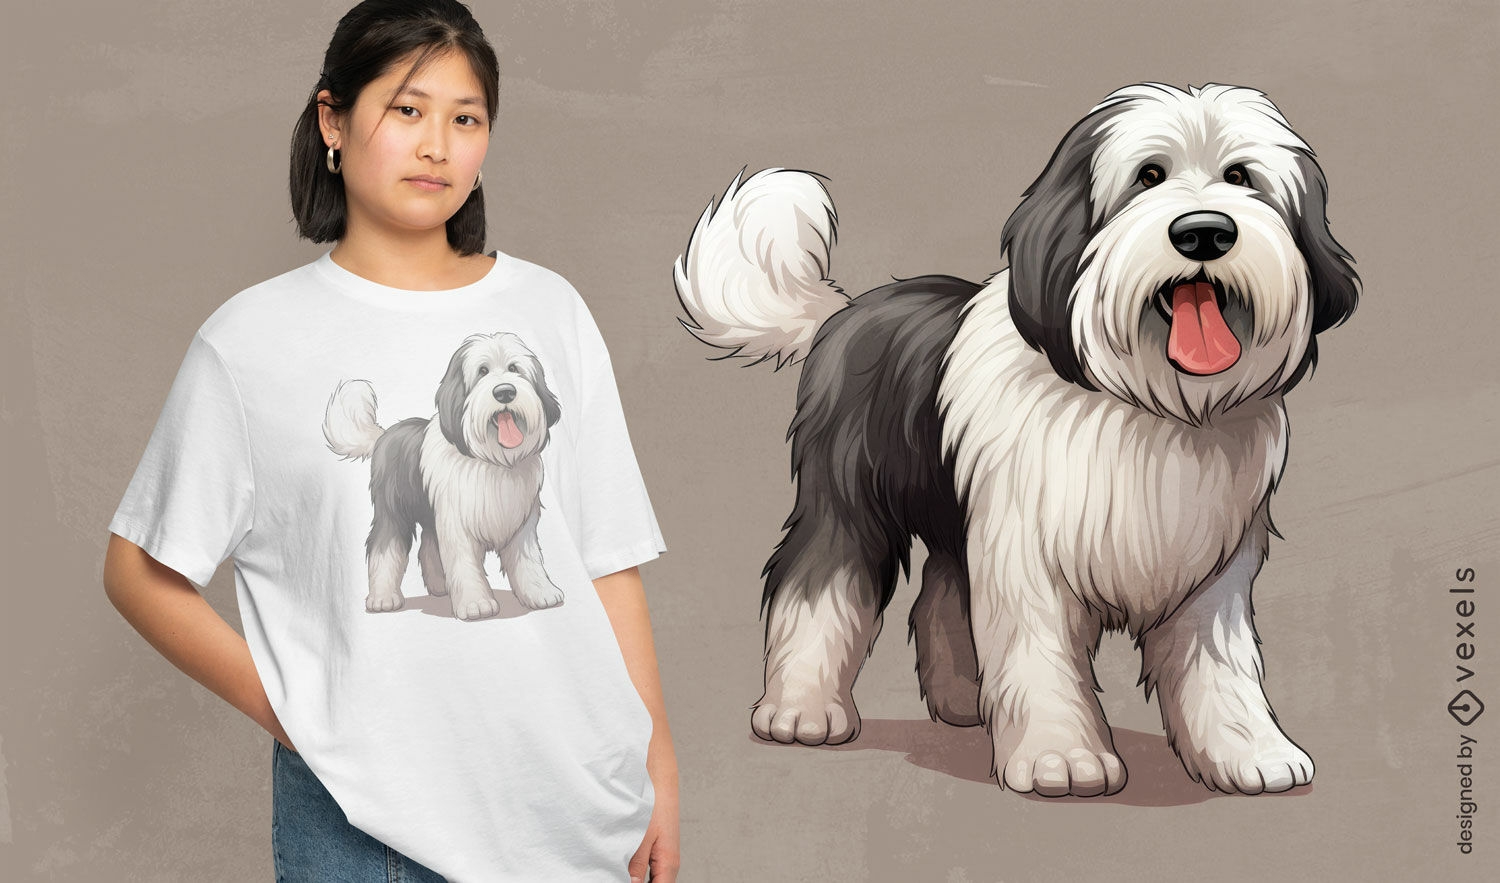 Adorable fluffy dog t-shirt design